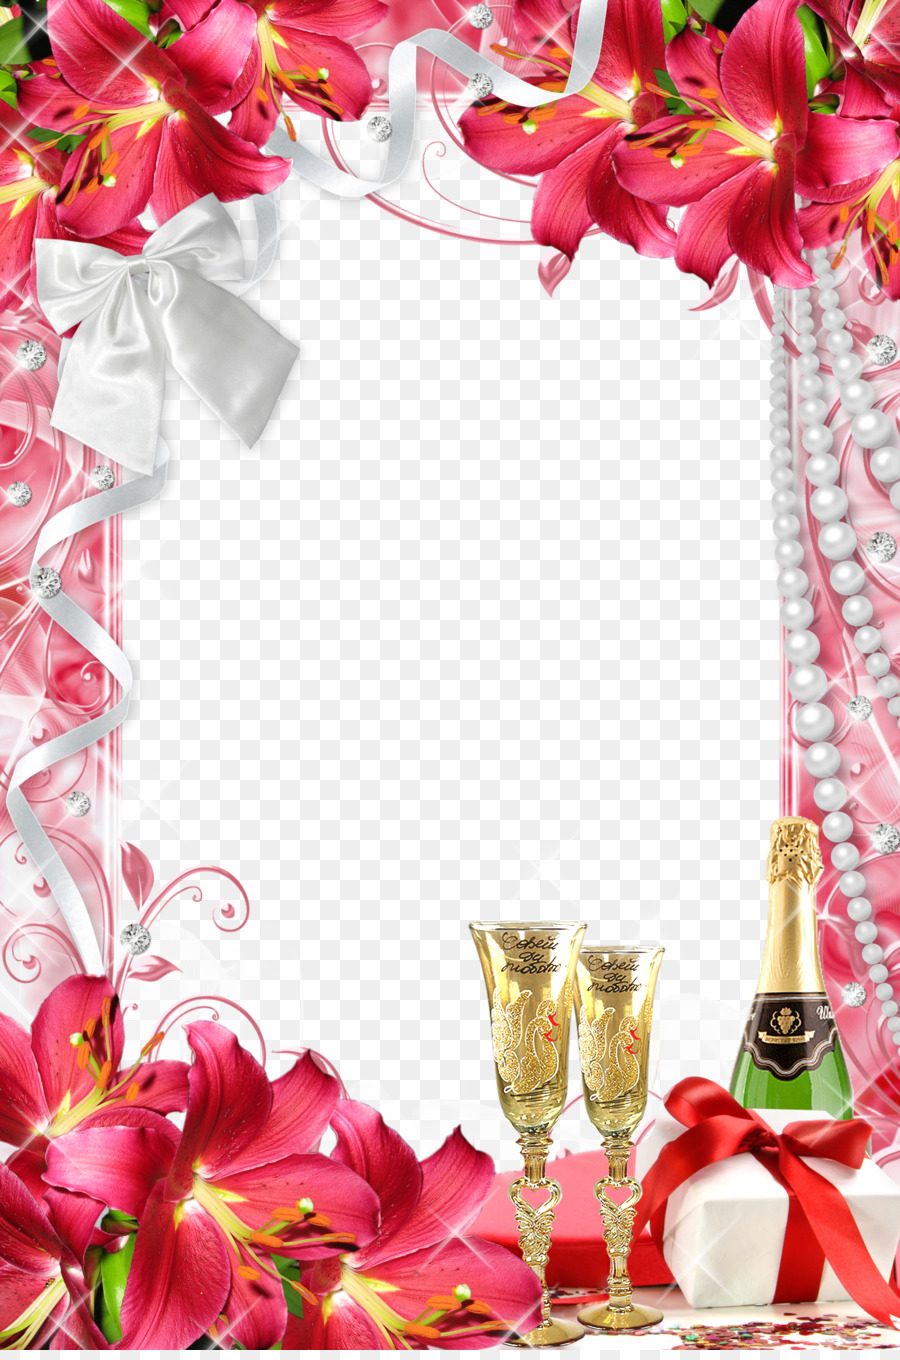 Wedding Frame Background Design Free Download - SlideBackground